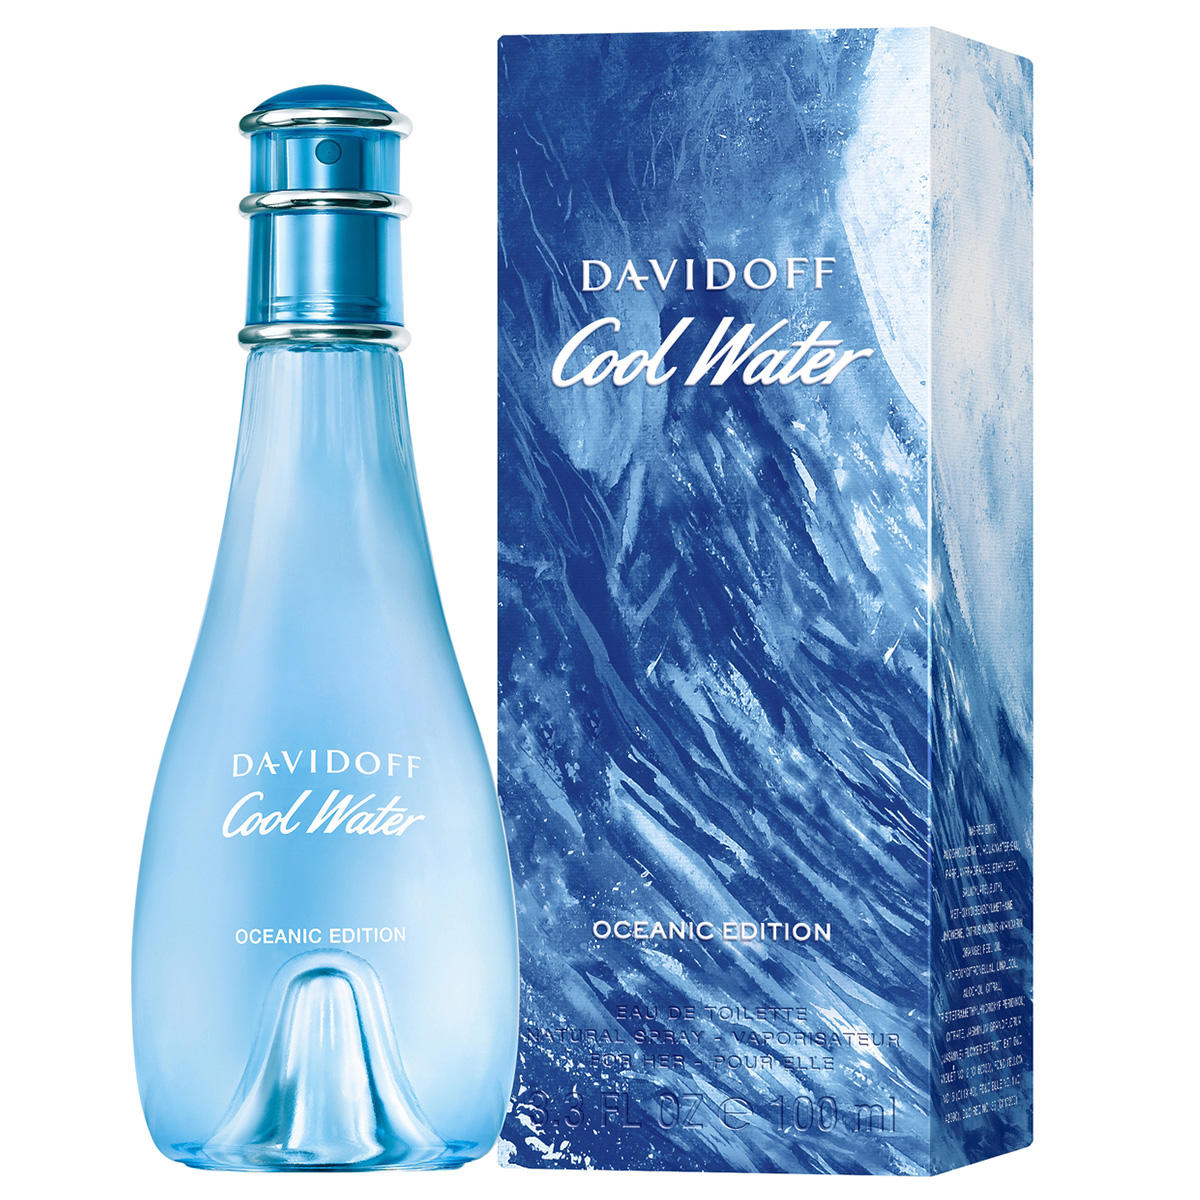 DAVIDOFF Cool Water Woman Oceanic Edition Eau de Toilette Limited Edition 100 ml - 2